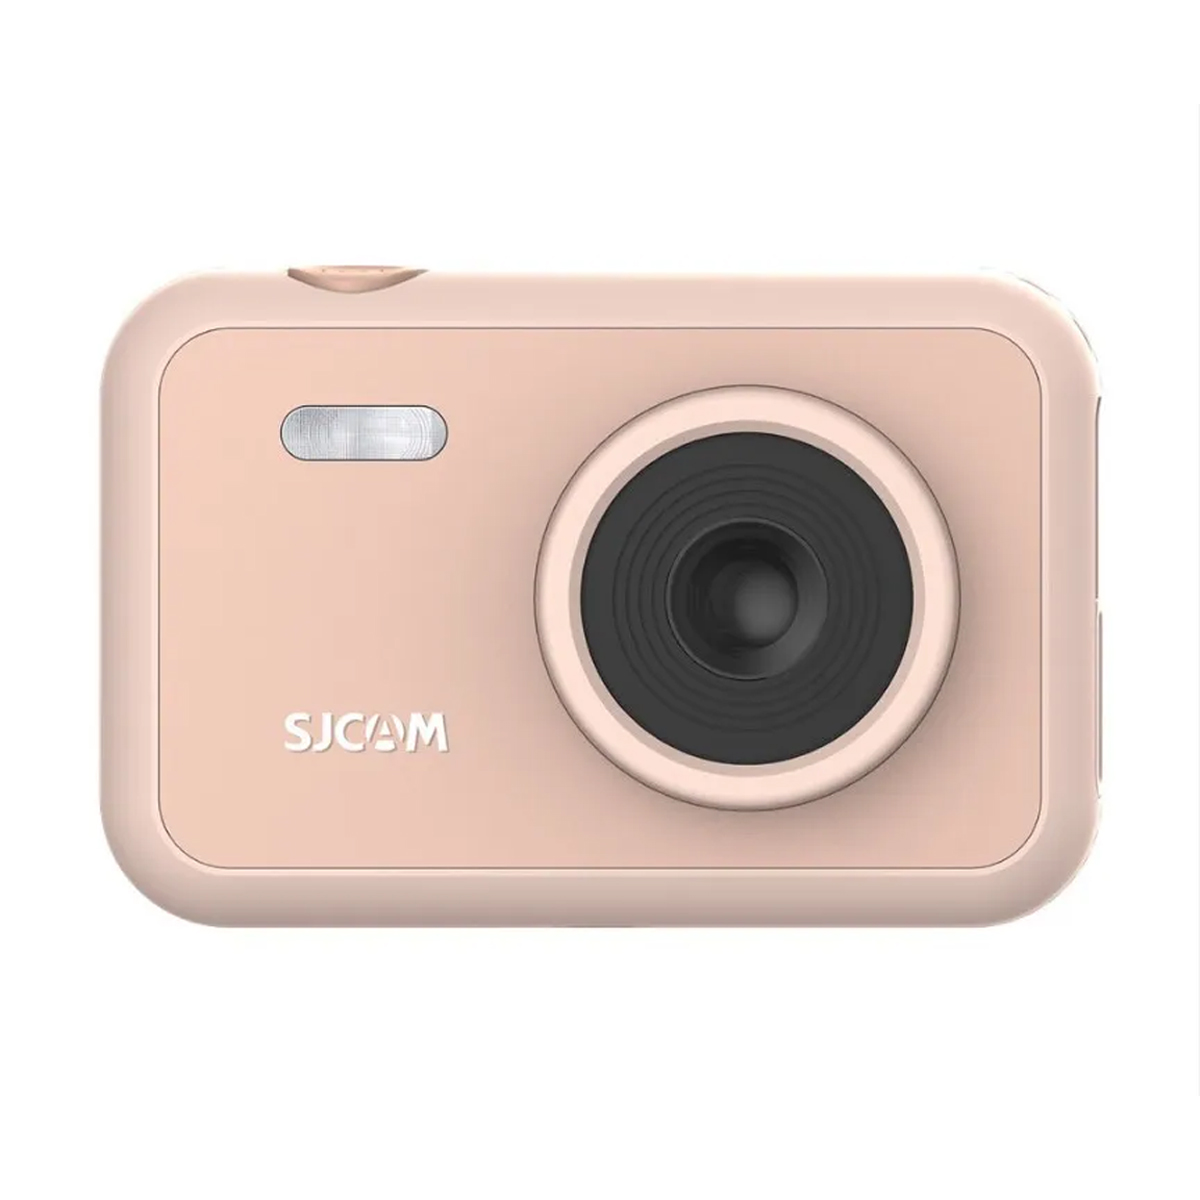 Детская экшн камера SJCAM FunCam розовая, FullHD